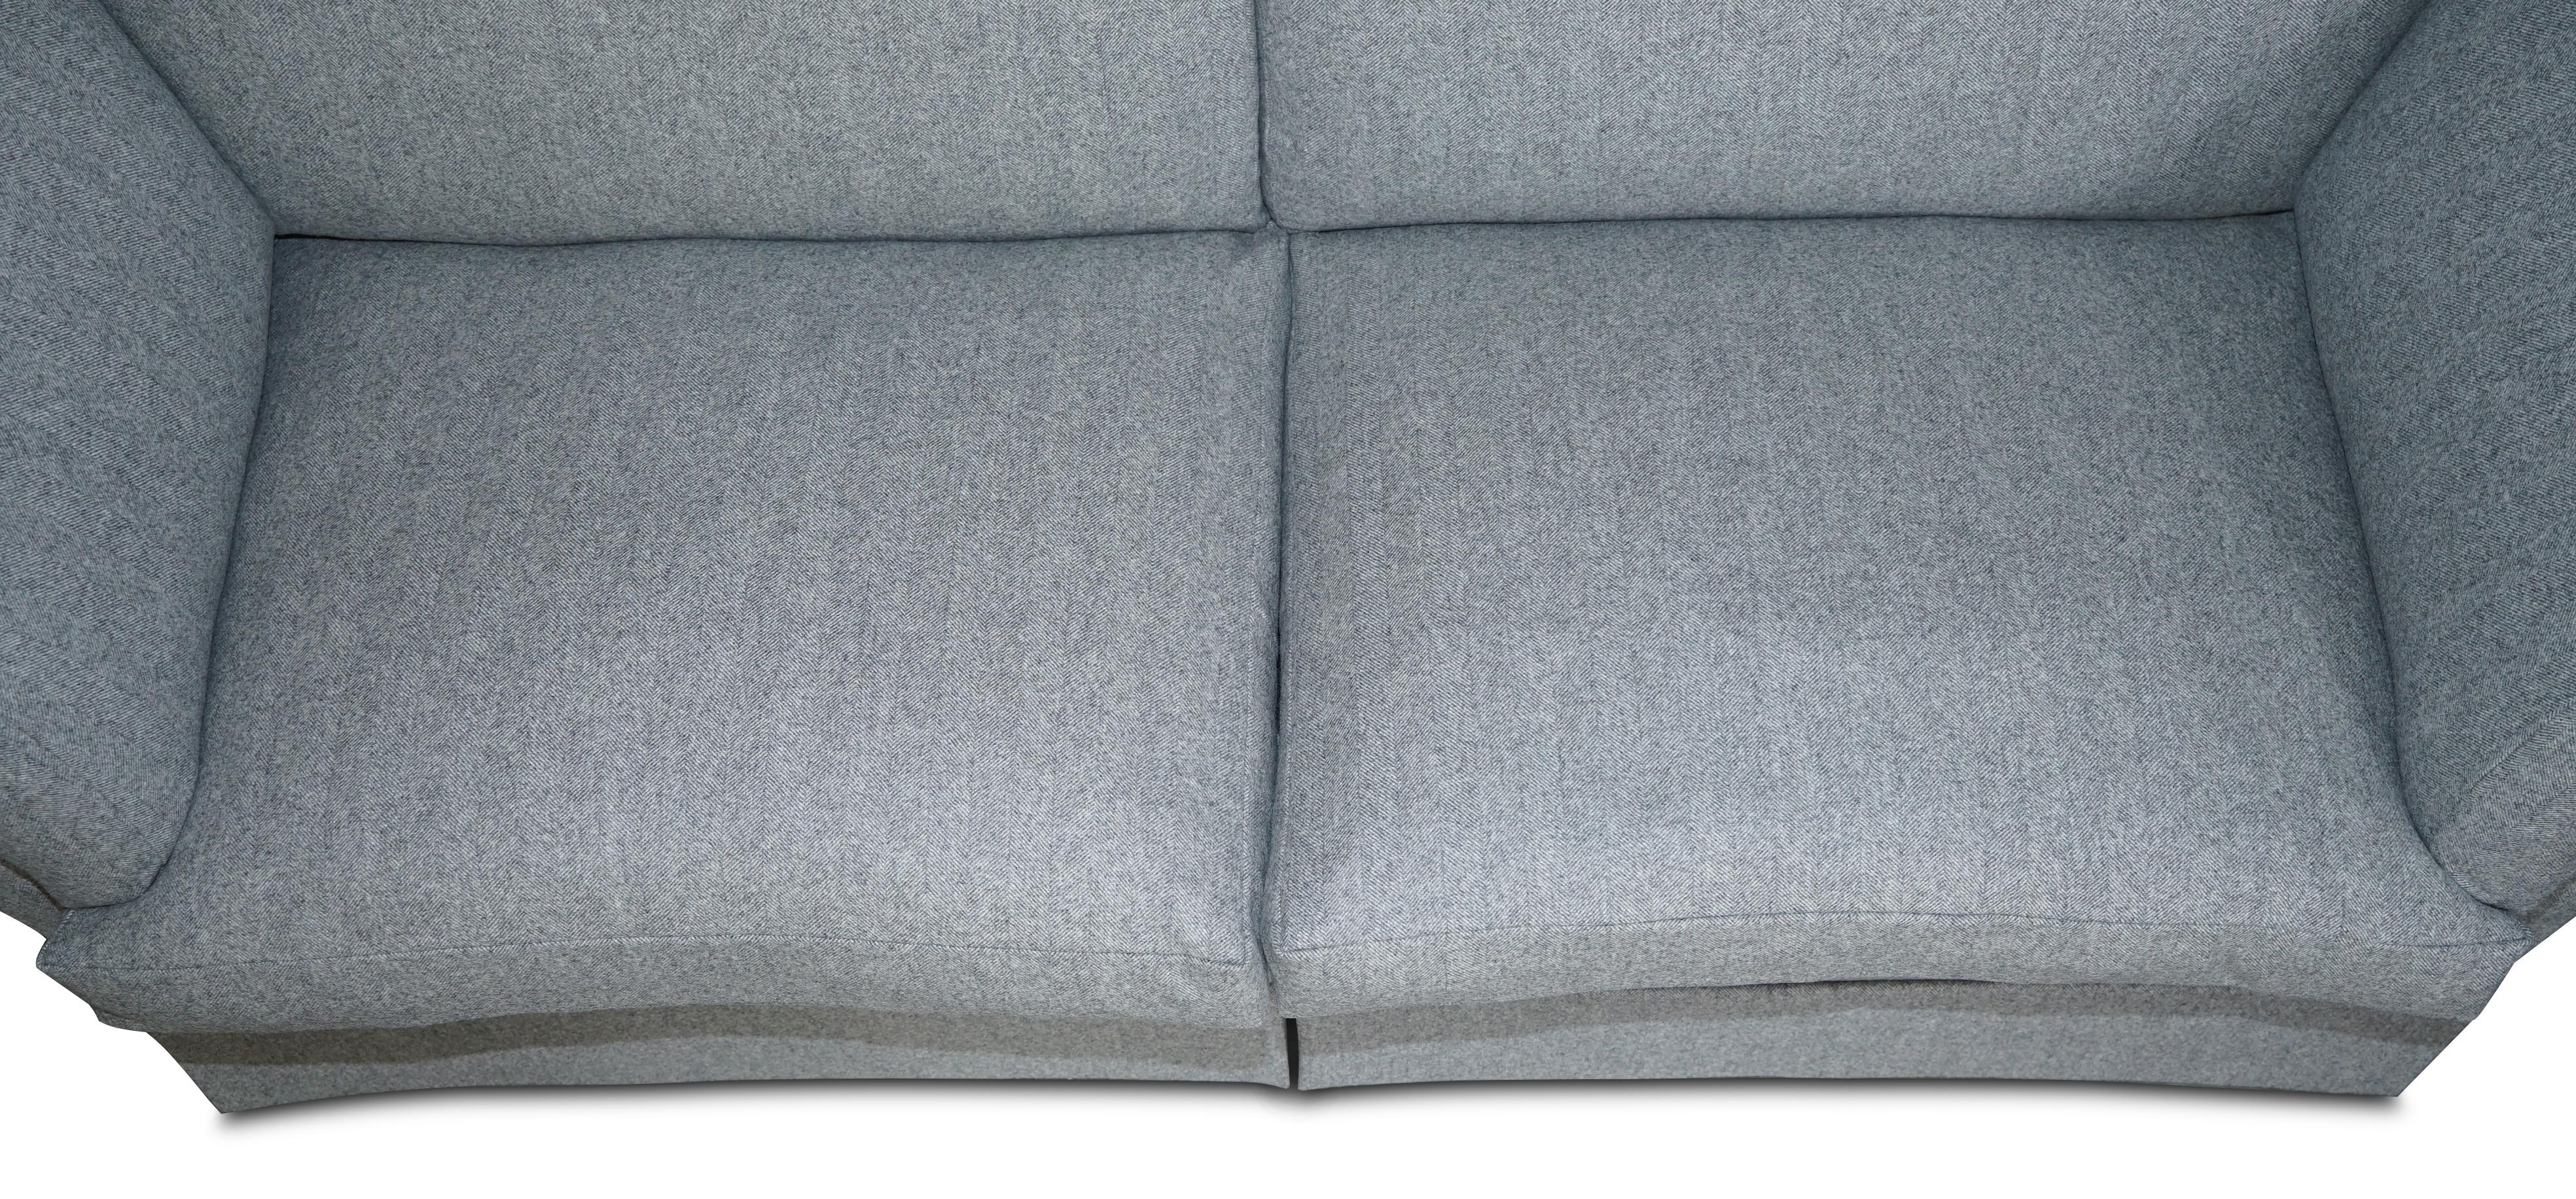 19th Century Fully Restored Howard & Son's Baring Sofa Grey Herringbone 100% Wool Upholstery For Sale